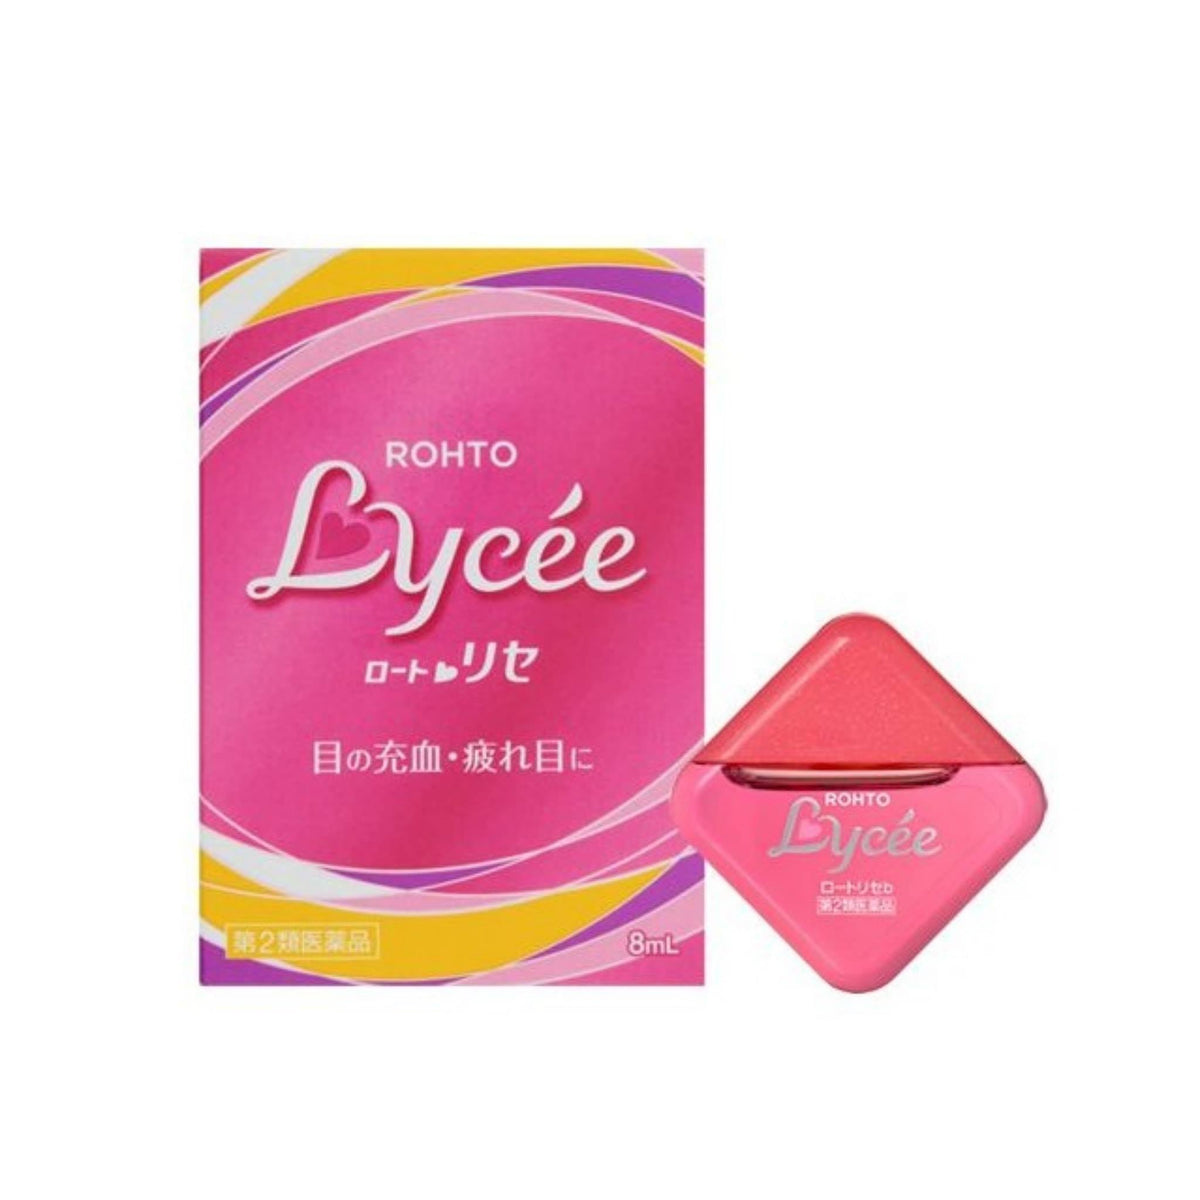 lychee eye